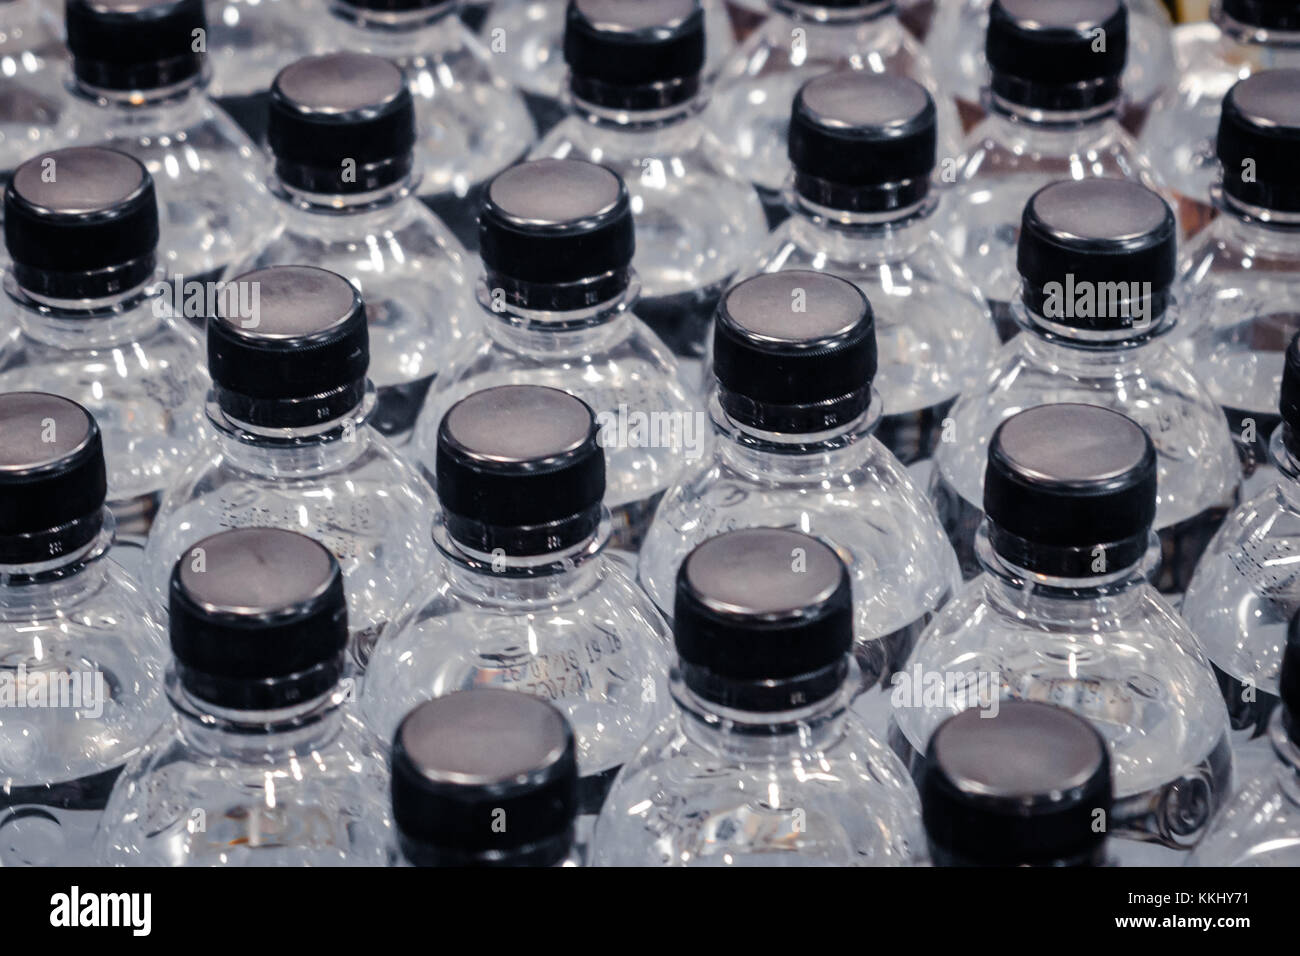 https://c8.alamy.com/comp/KKHY71/many-water-bottles-plastic-bottles-in-retail-pet-plastic-bottles-of-KKHY71.jpg